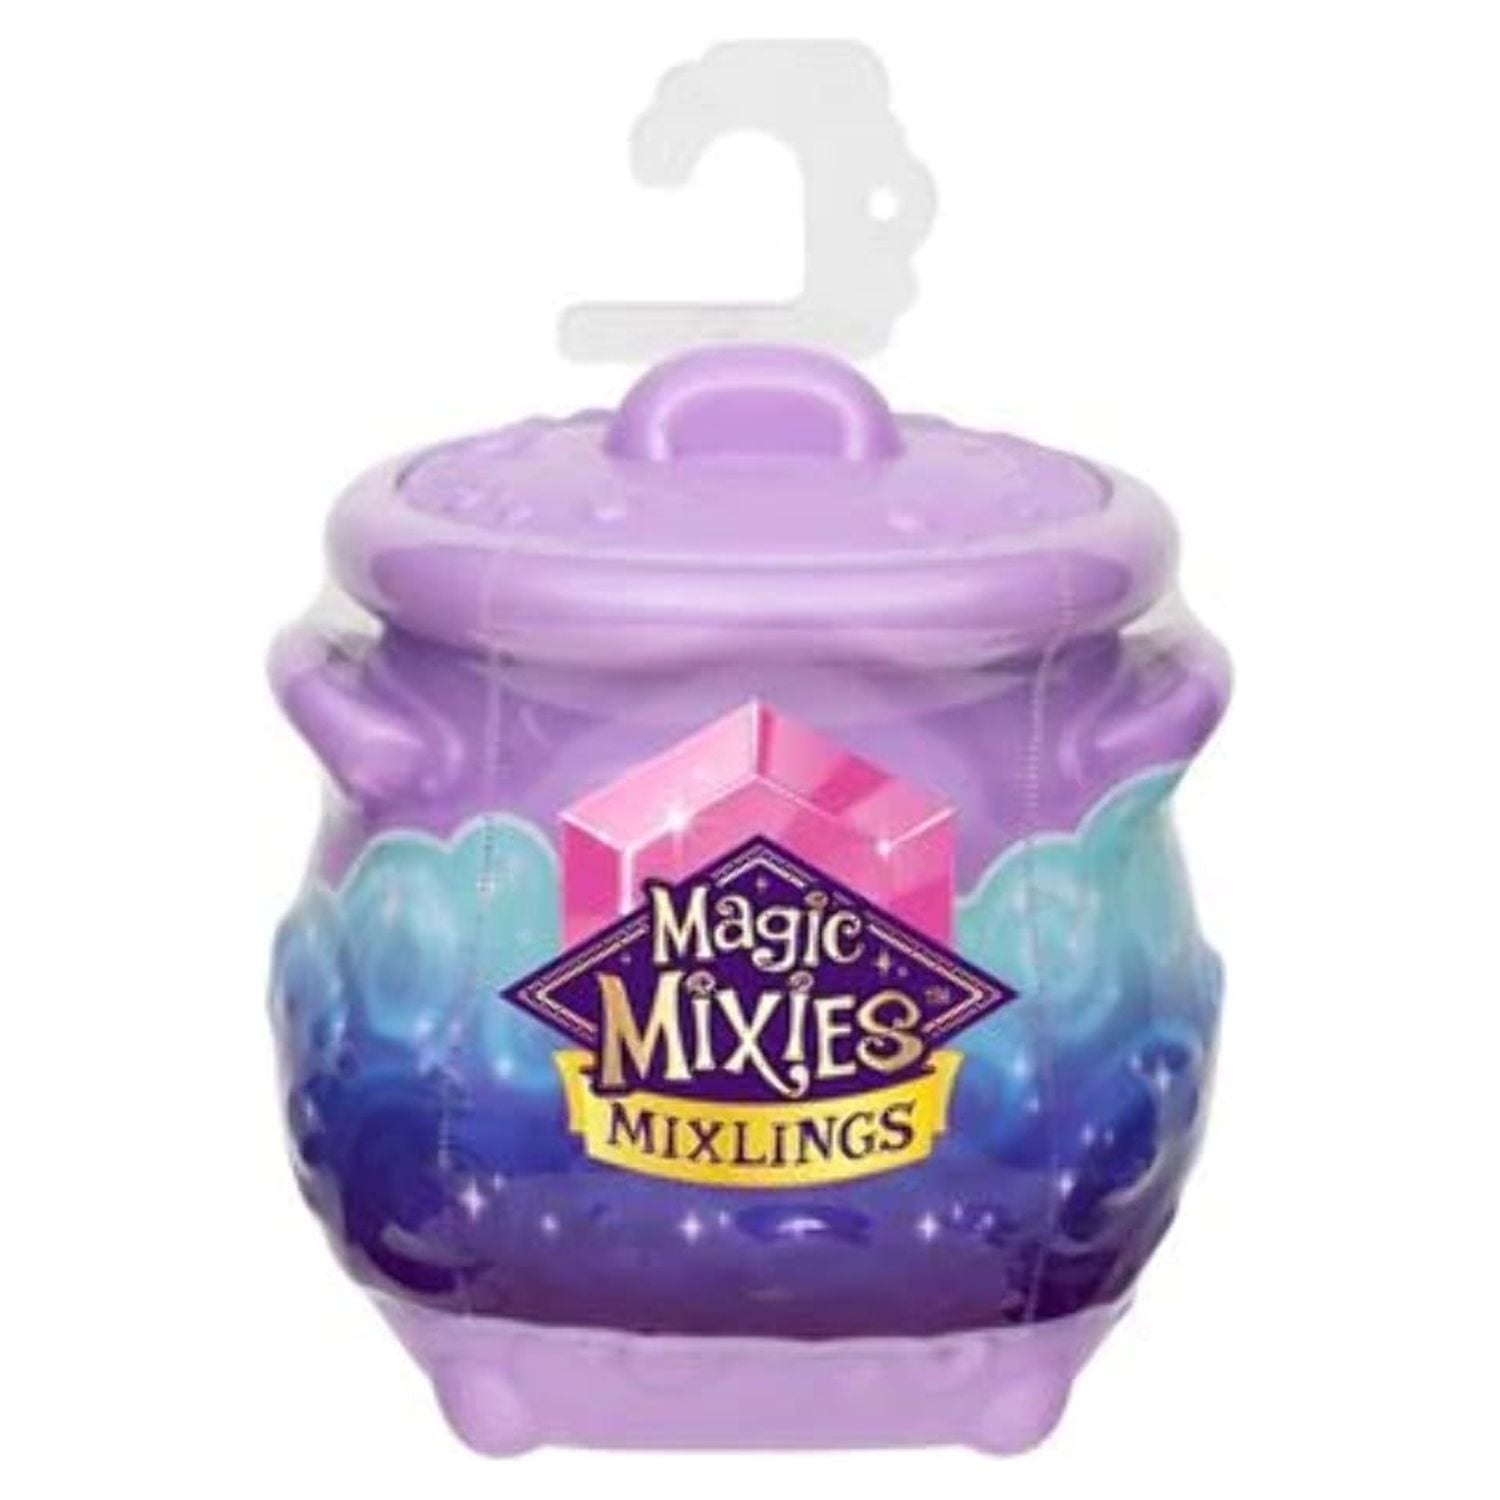 Moose Toys Magic Mixies Cauldron - 14668 for sale online